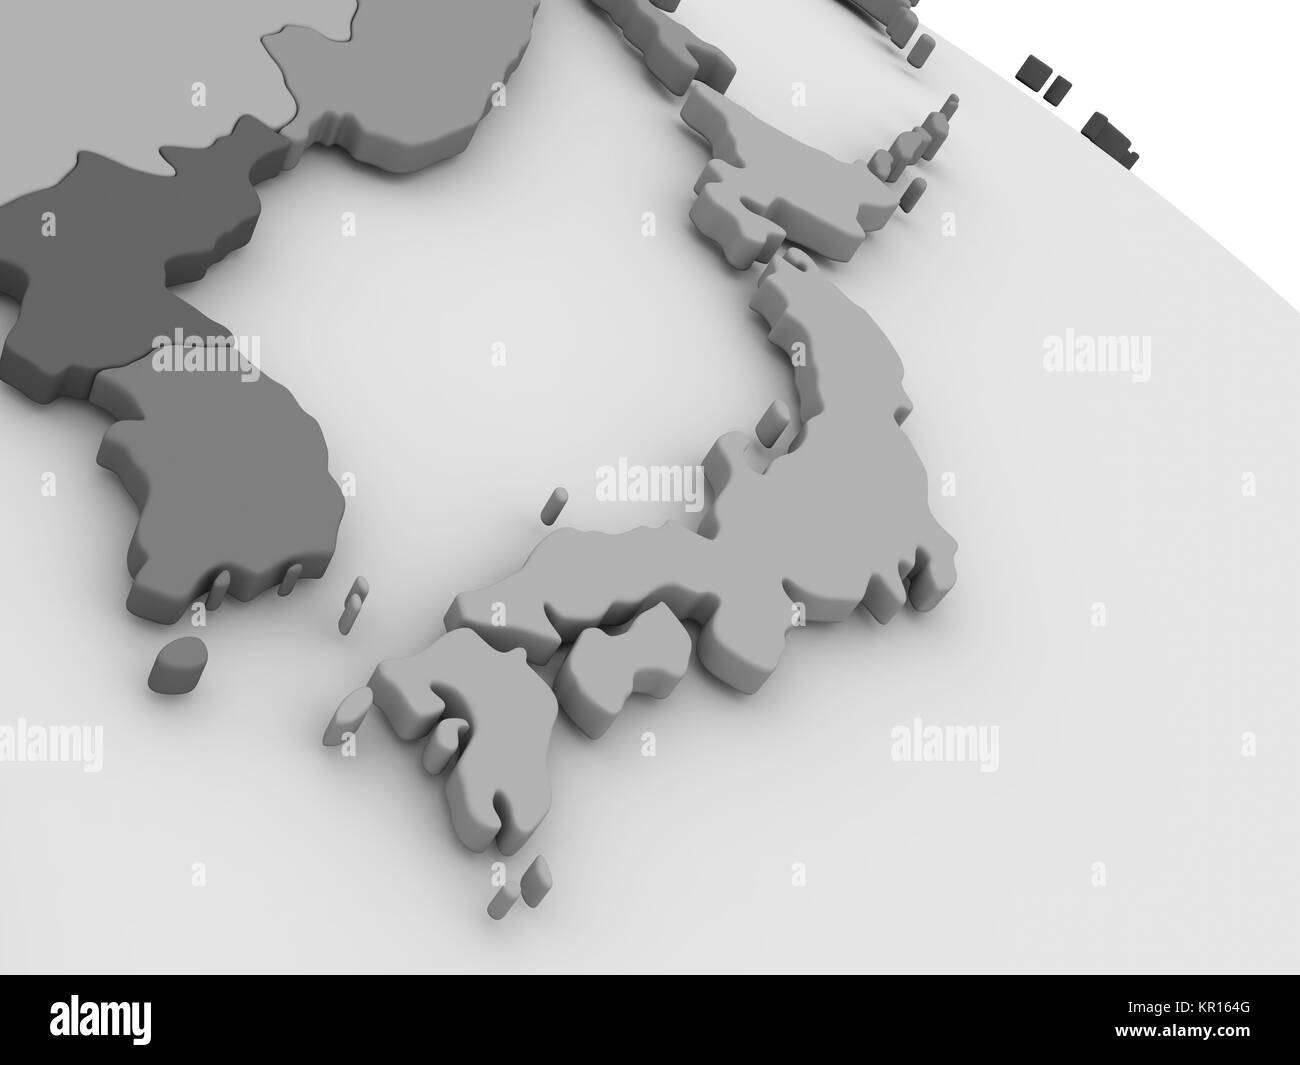 Japan on grey 3D map Stock Photo